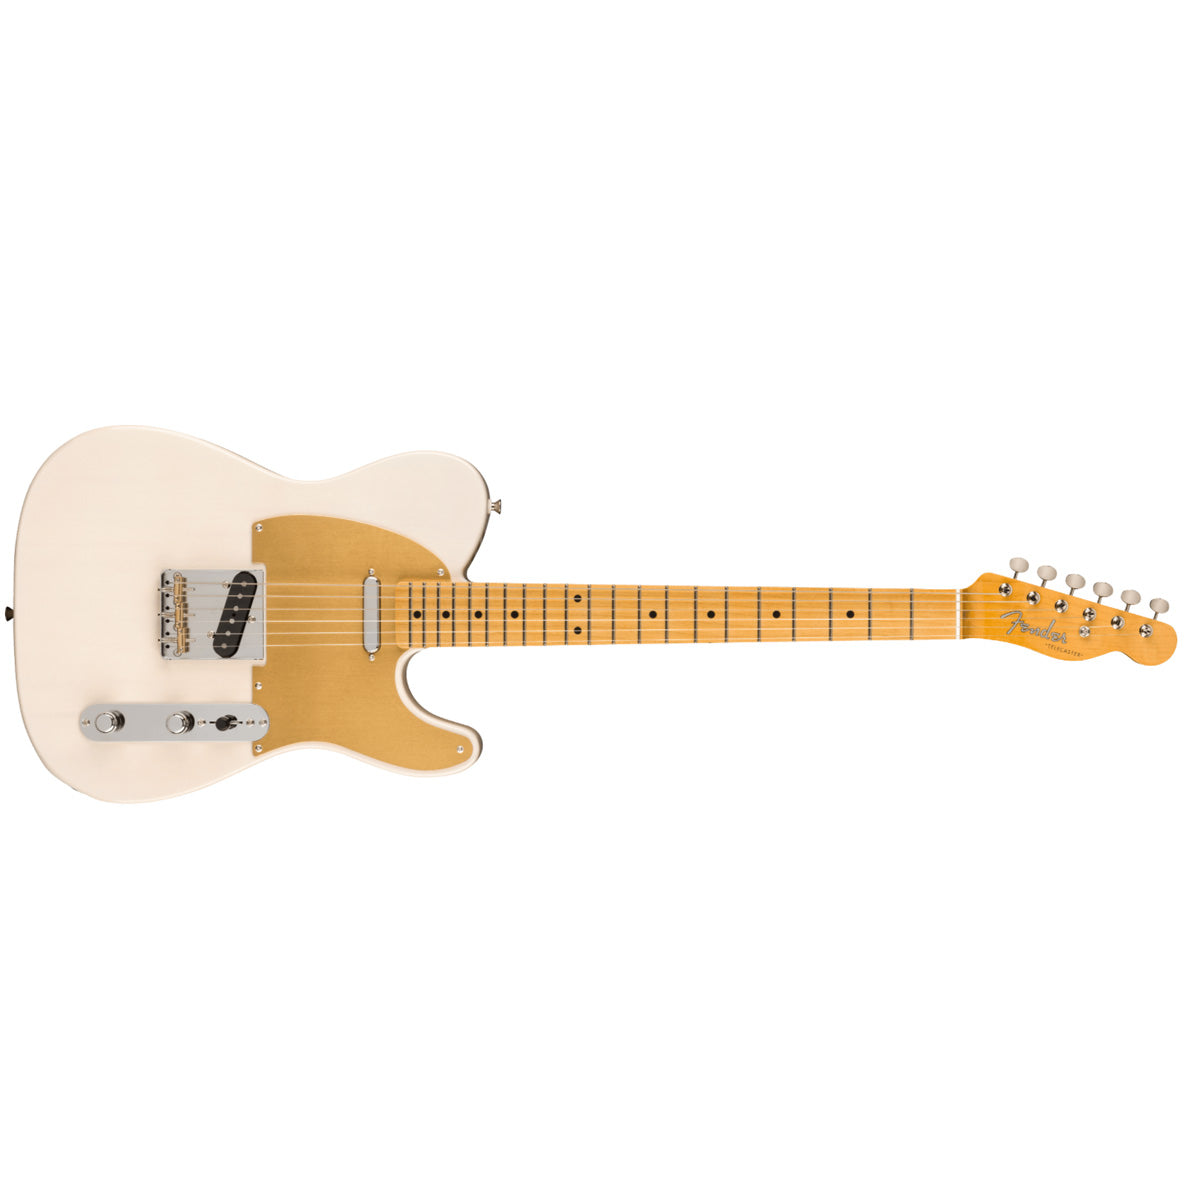 Fender JV Modified 50s Telecaster Electric Guitar MN White Blonde - MIJ 0251962301